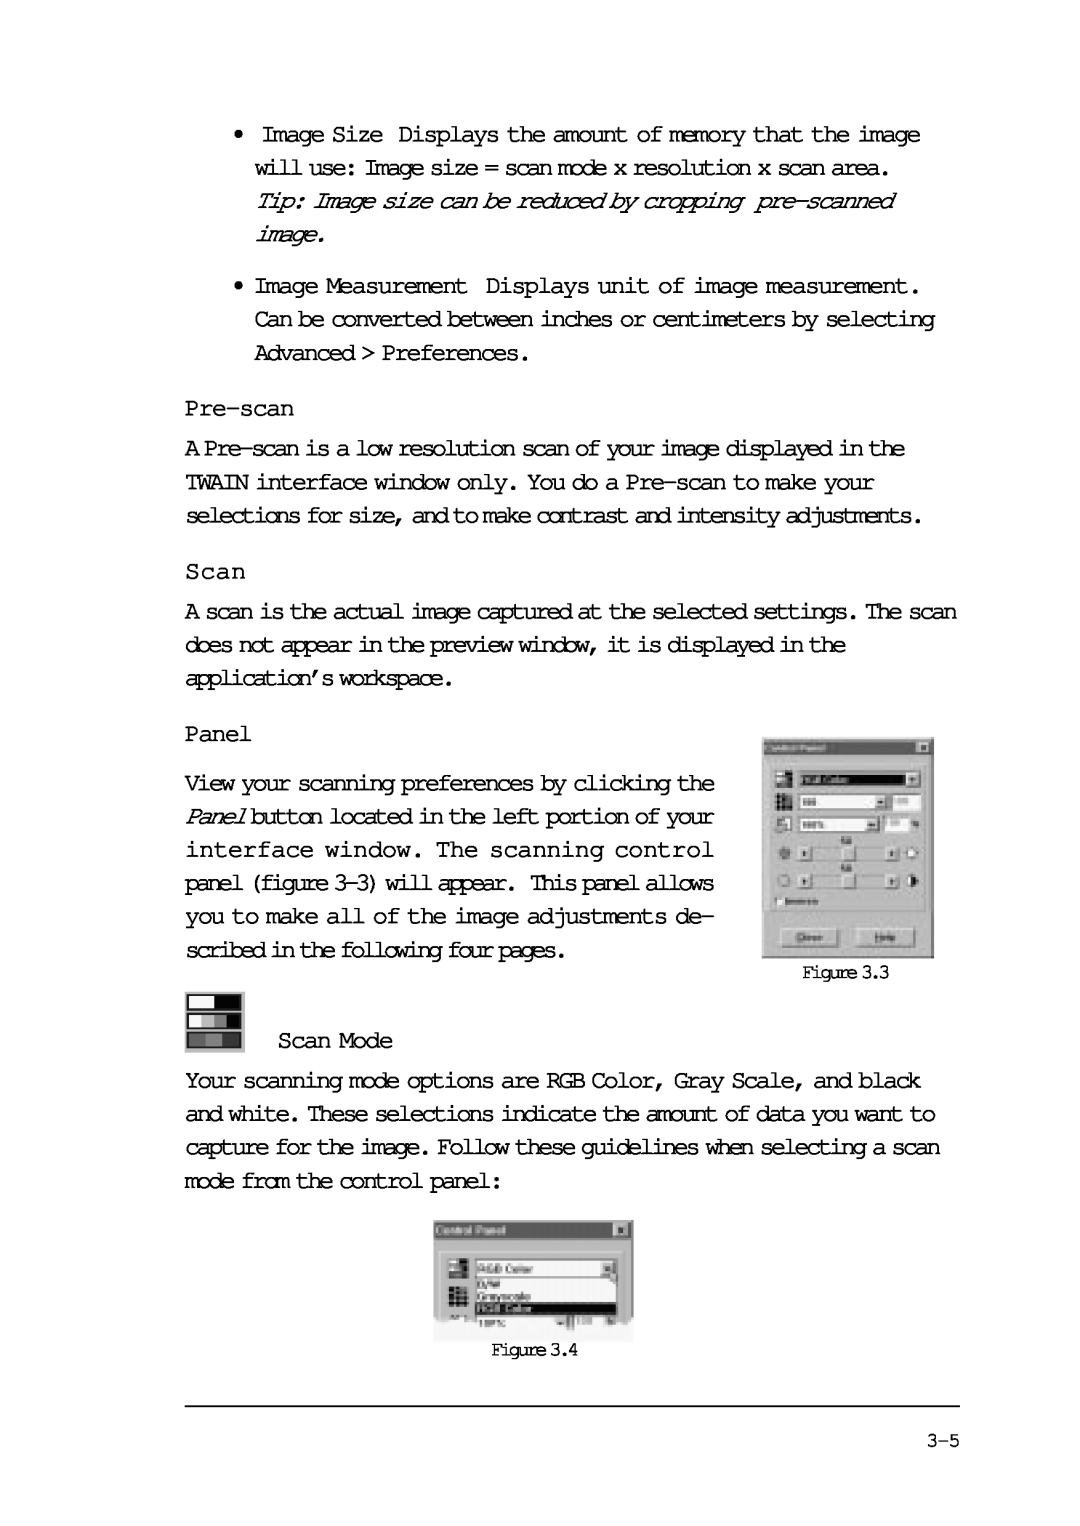 Compaq P/N DOC-FB4B manual Pre-scan, Panel, Scan Mode, 3 